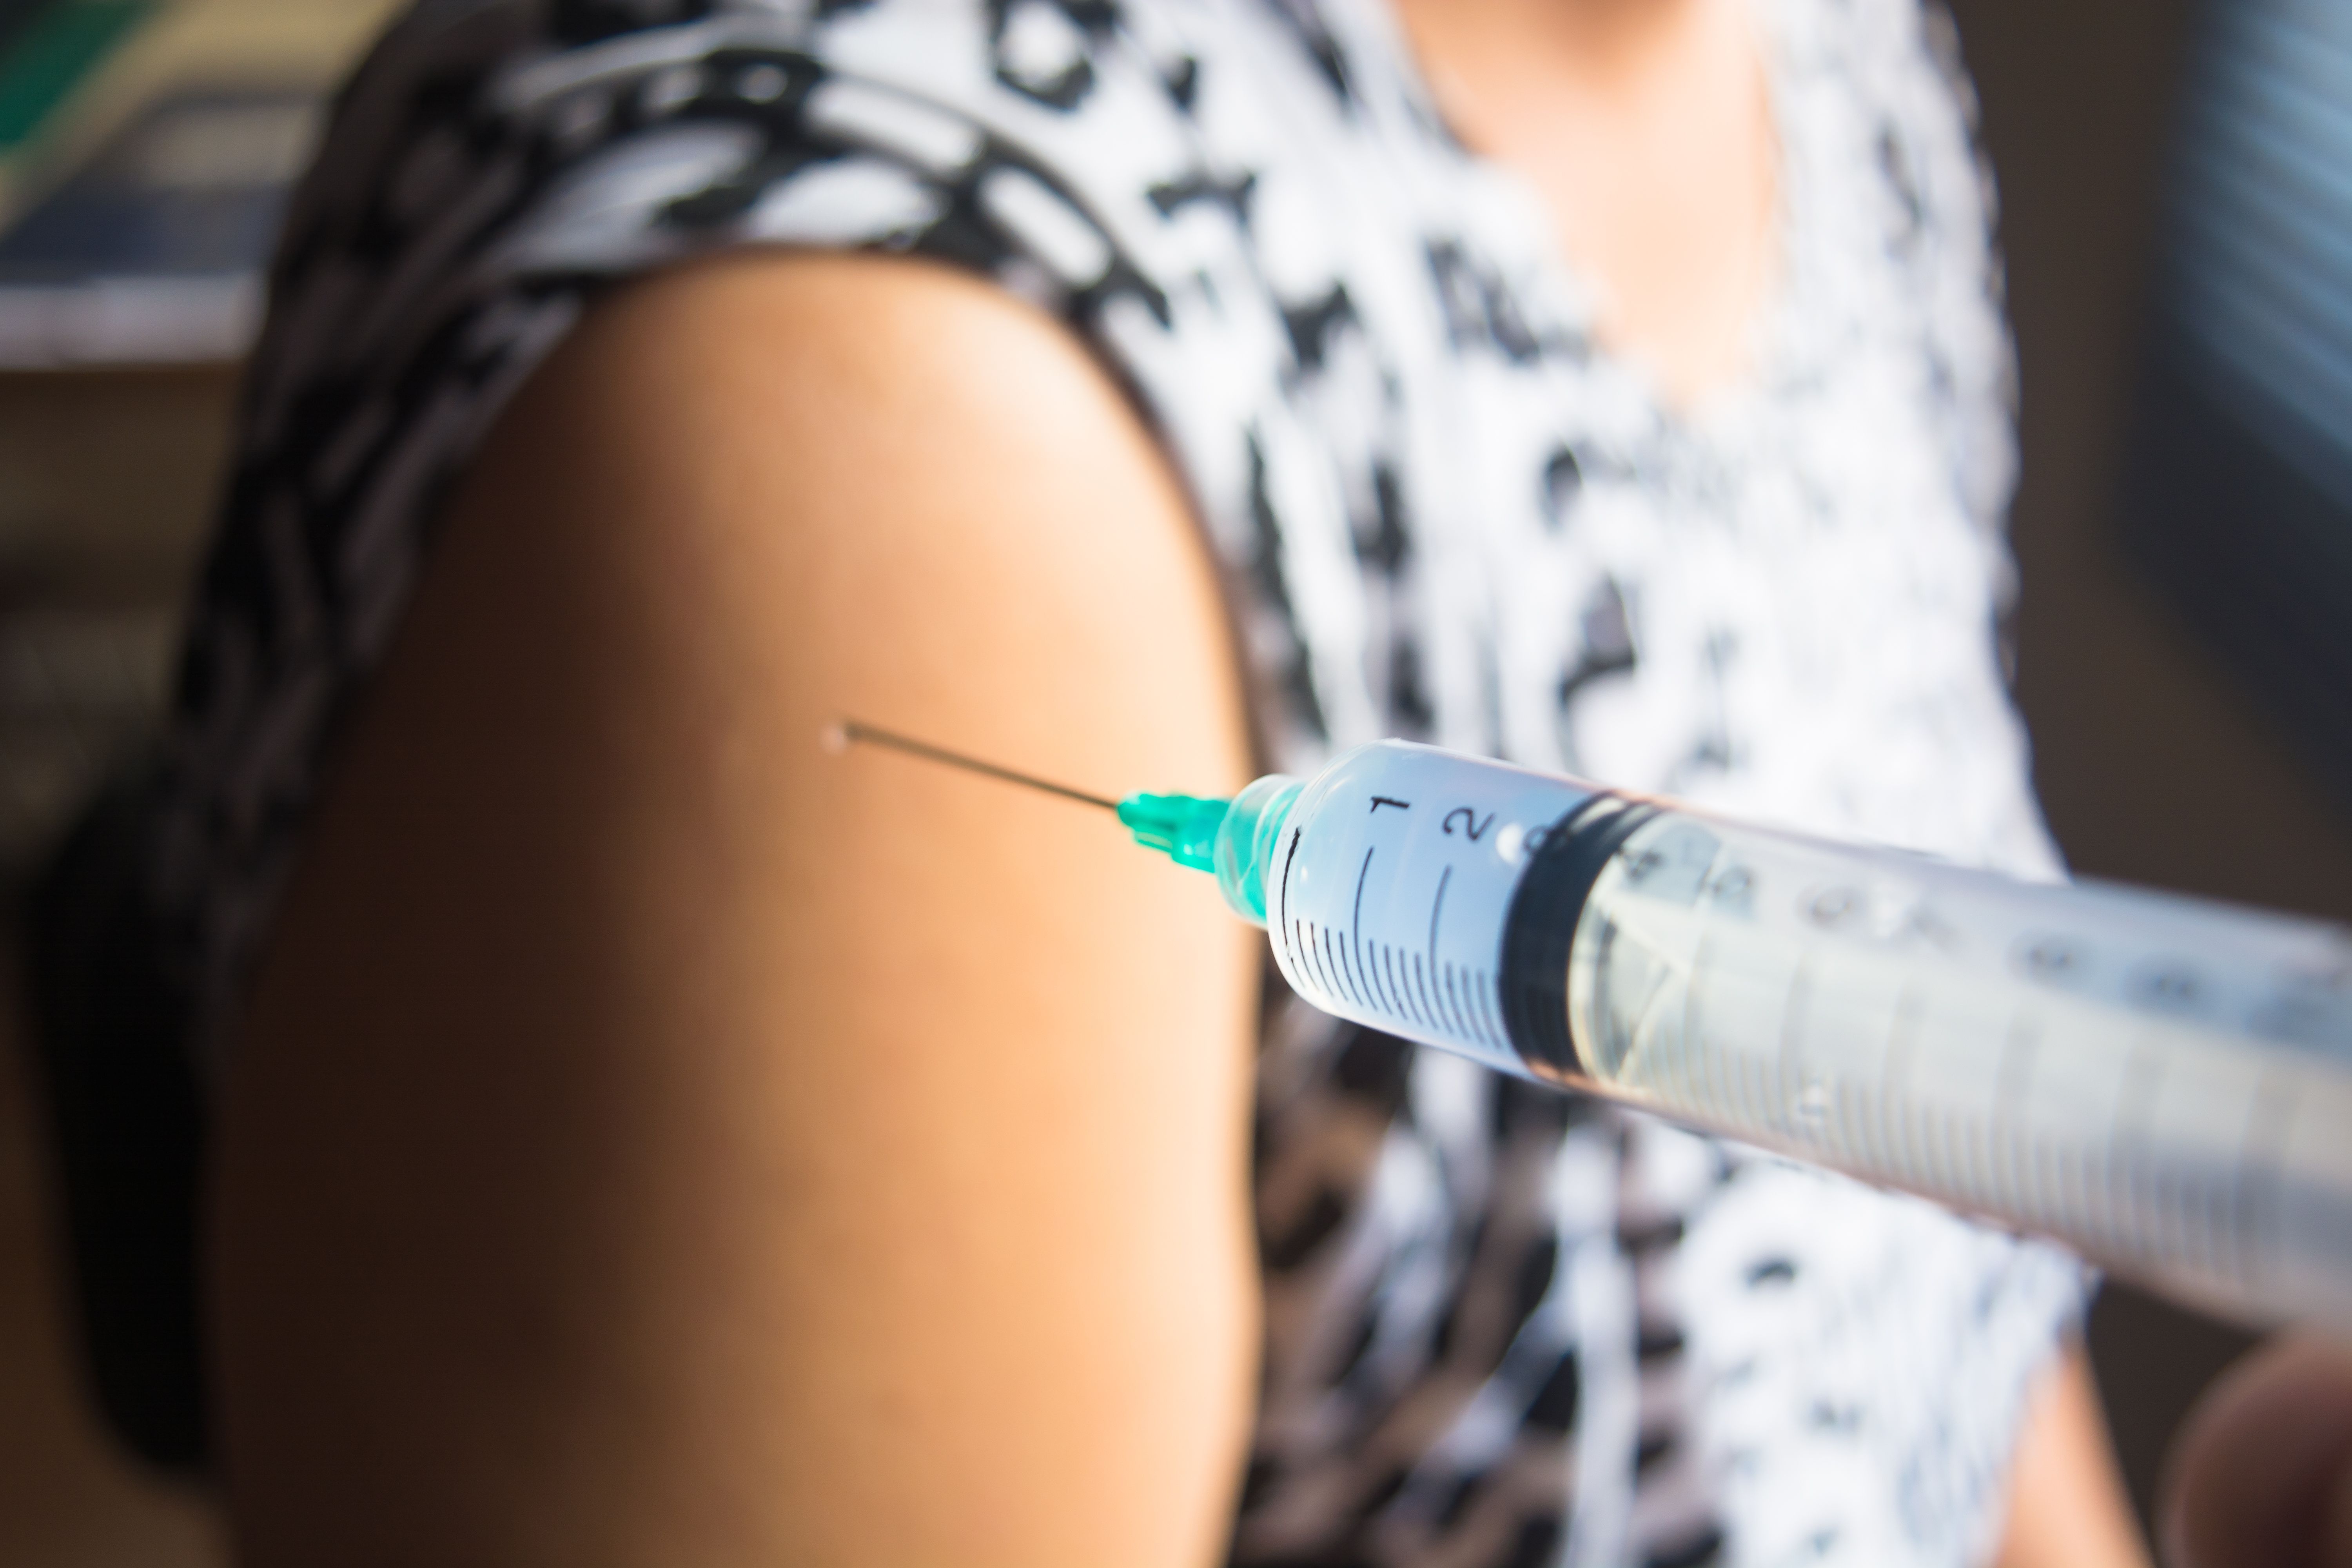 Amsterdam UMC vaccineert groep hoog-risicopatiënten